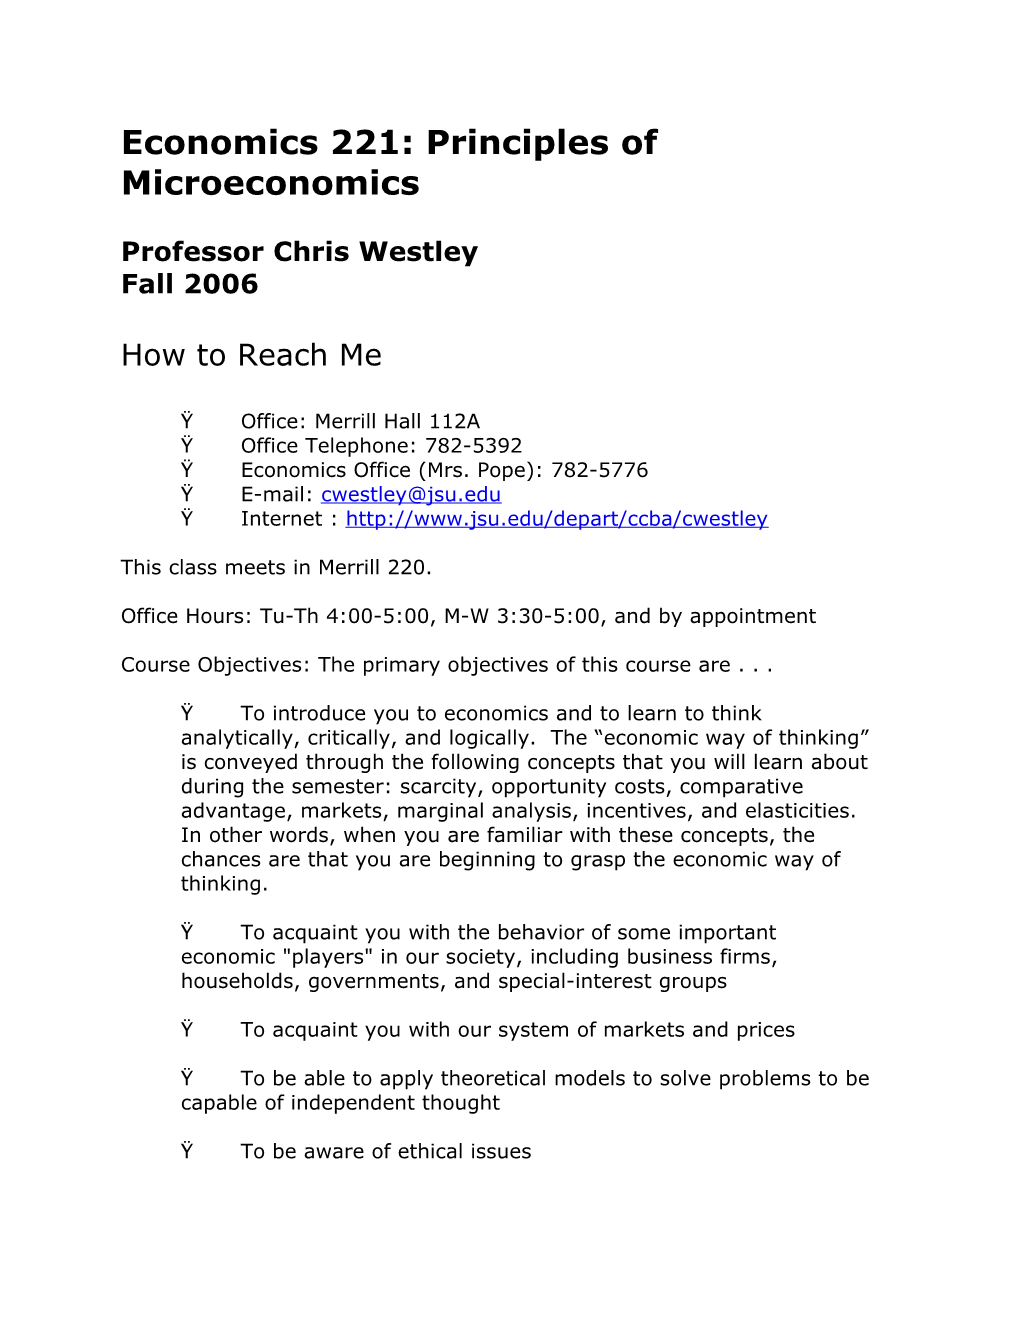 Economics 221: Principles of Microeconomics Professor Chris Westley